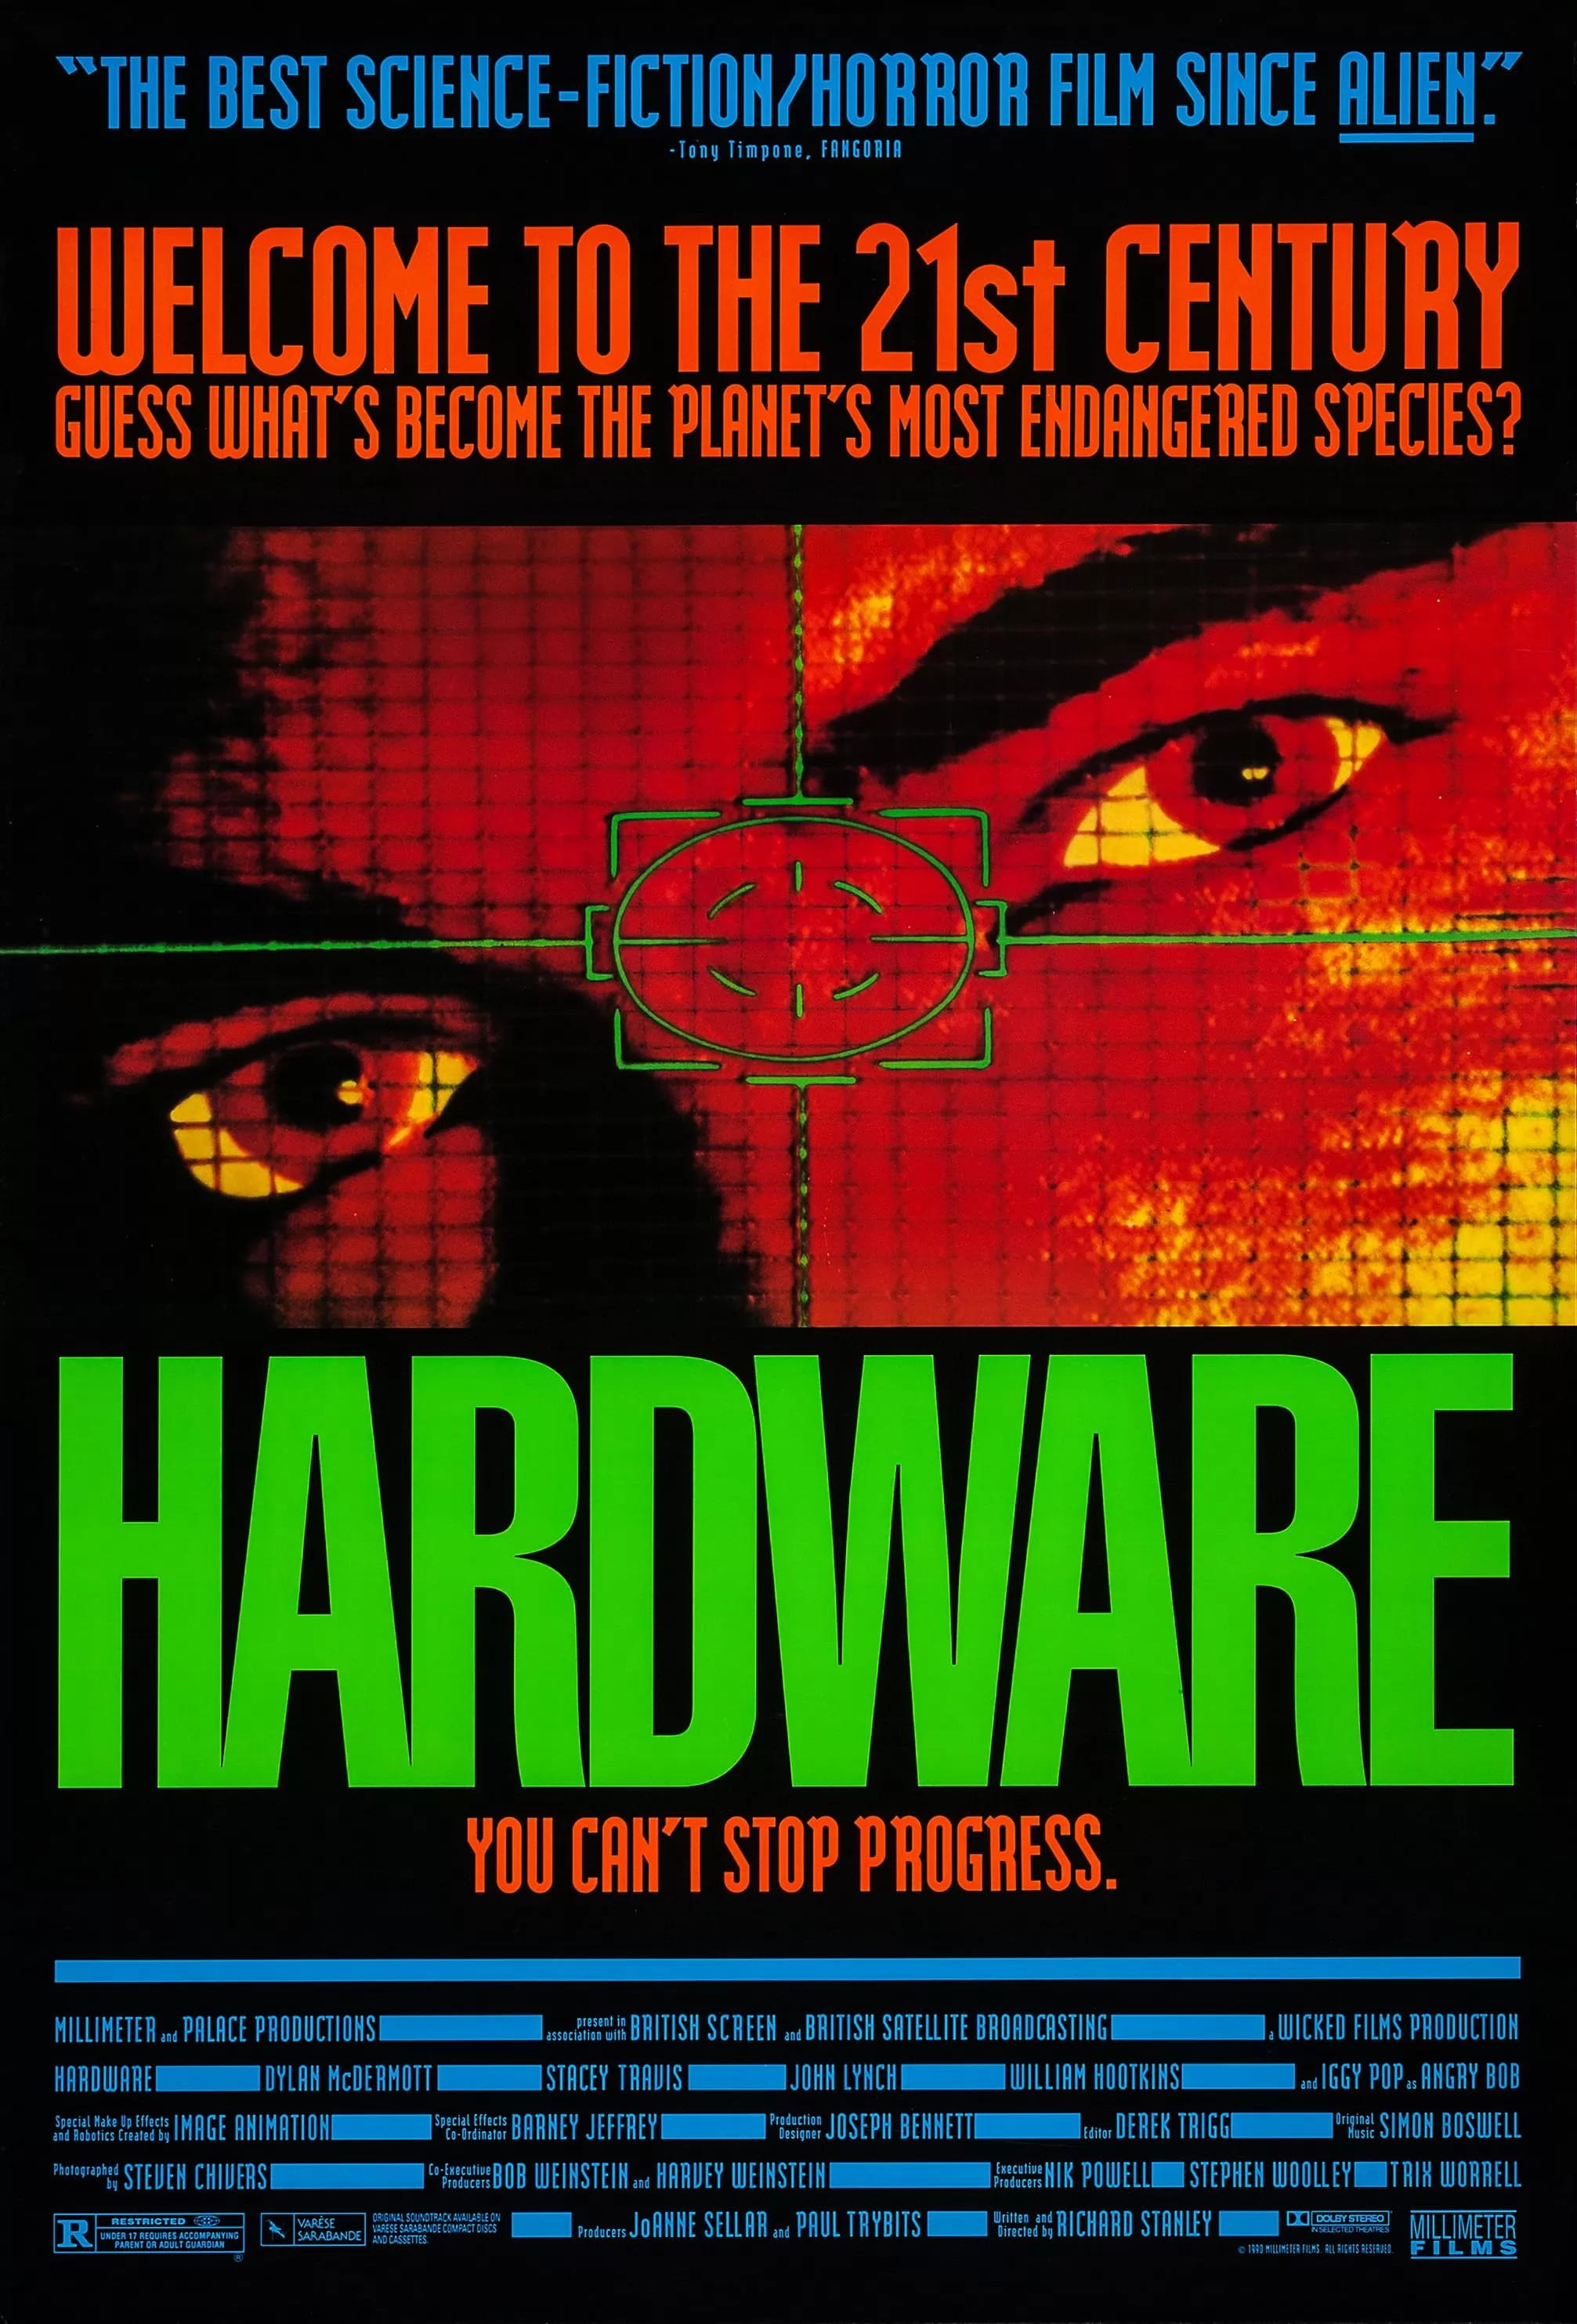 Железо / Hardware (1990) отзывы. Рецензии. Новости кино. Актеры фильма Железо. Отзывы о фильме Железо